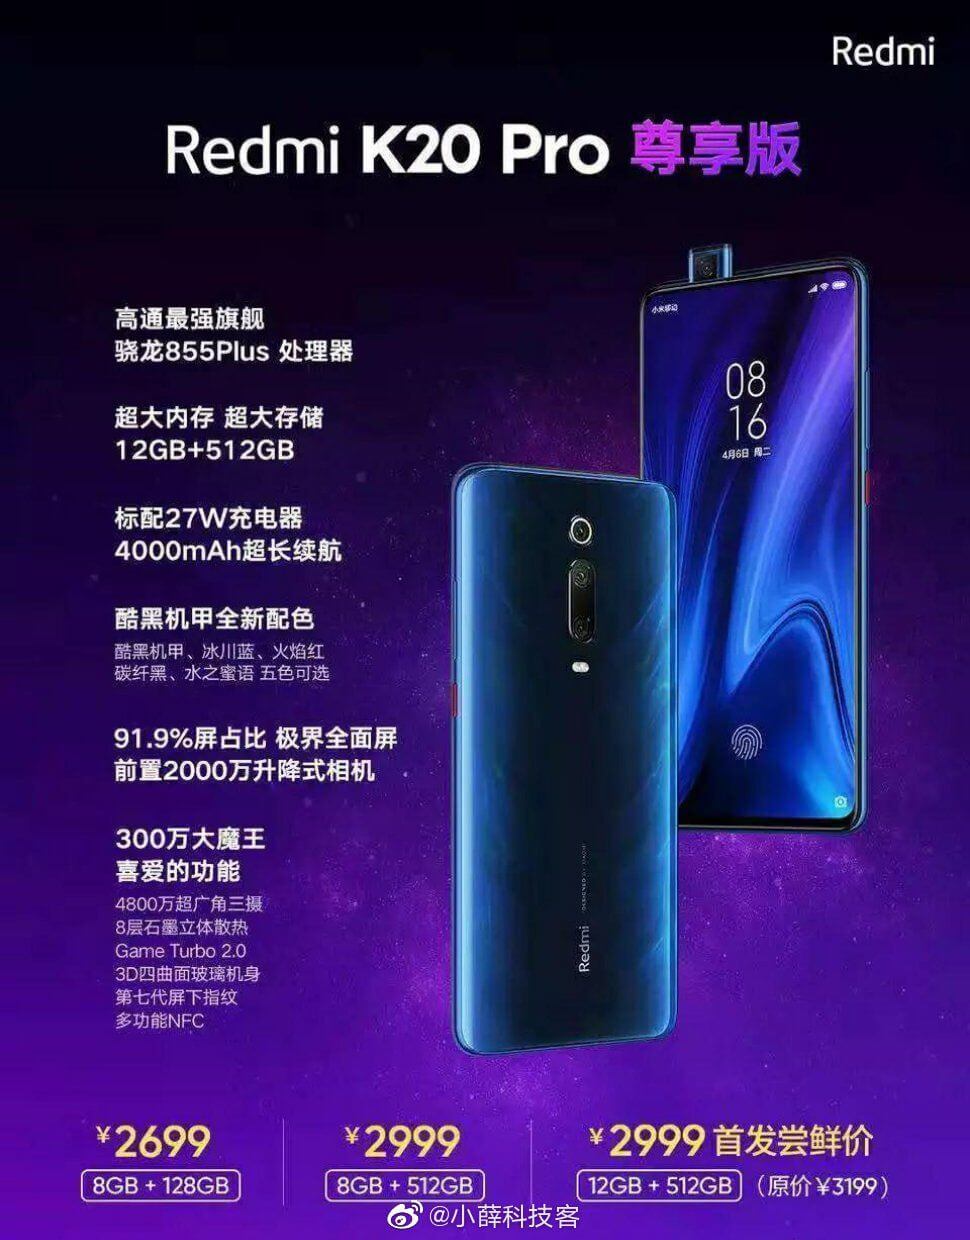 Redmi K20 Pro Extreme Edition